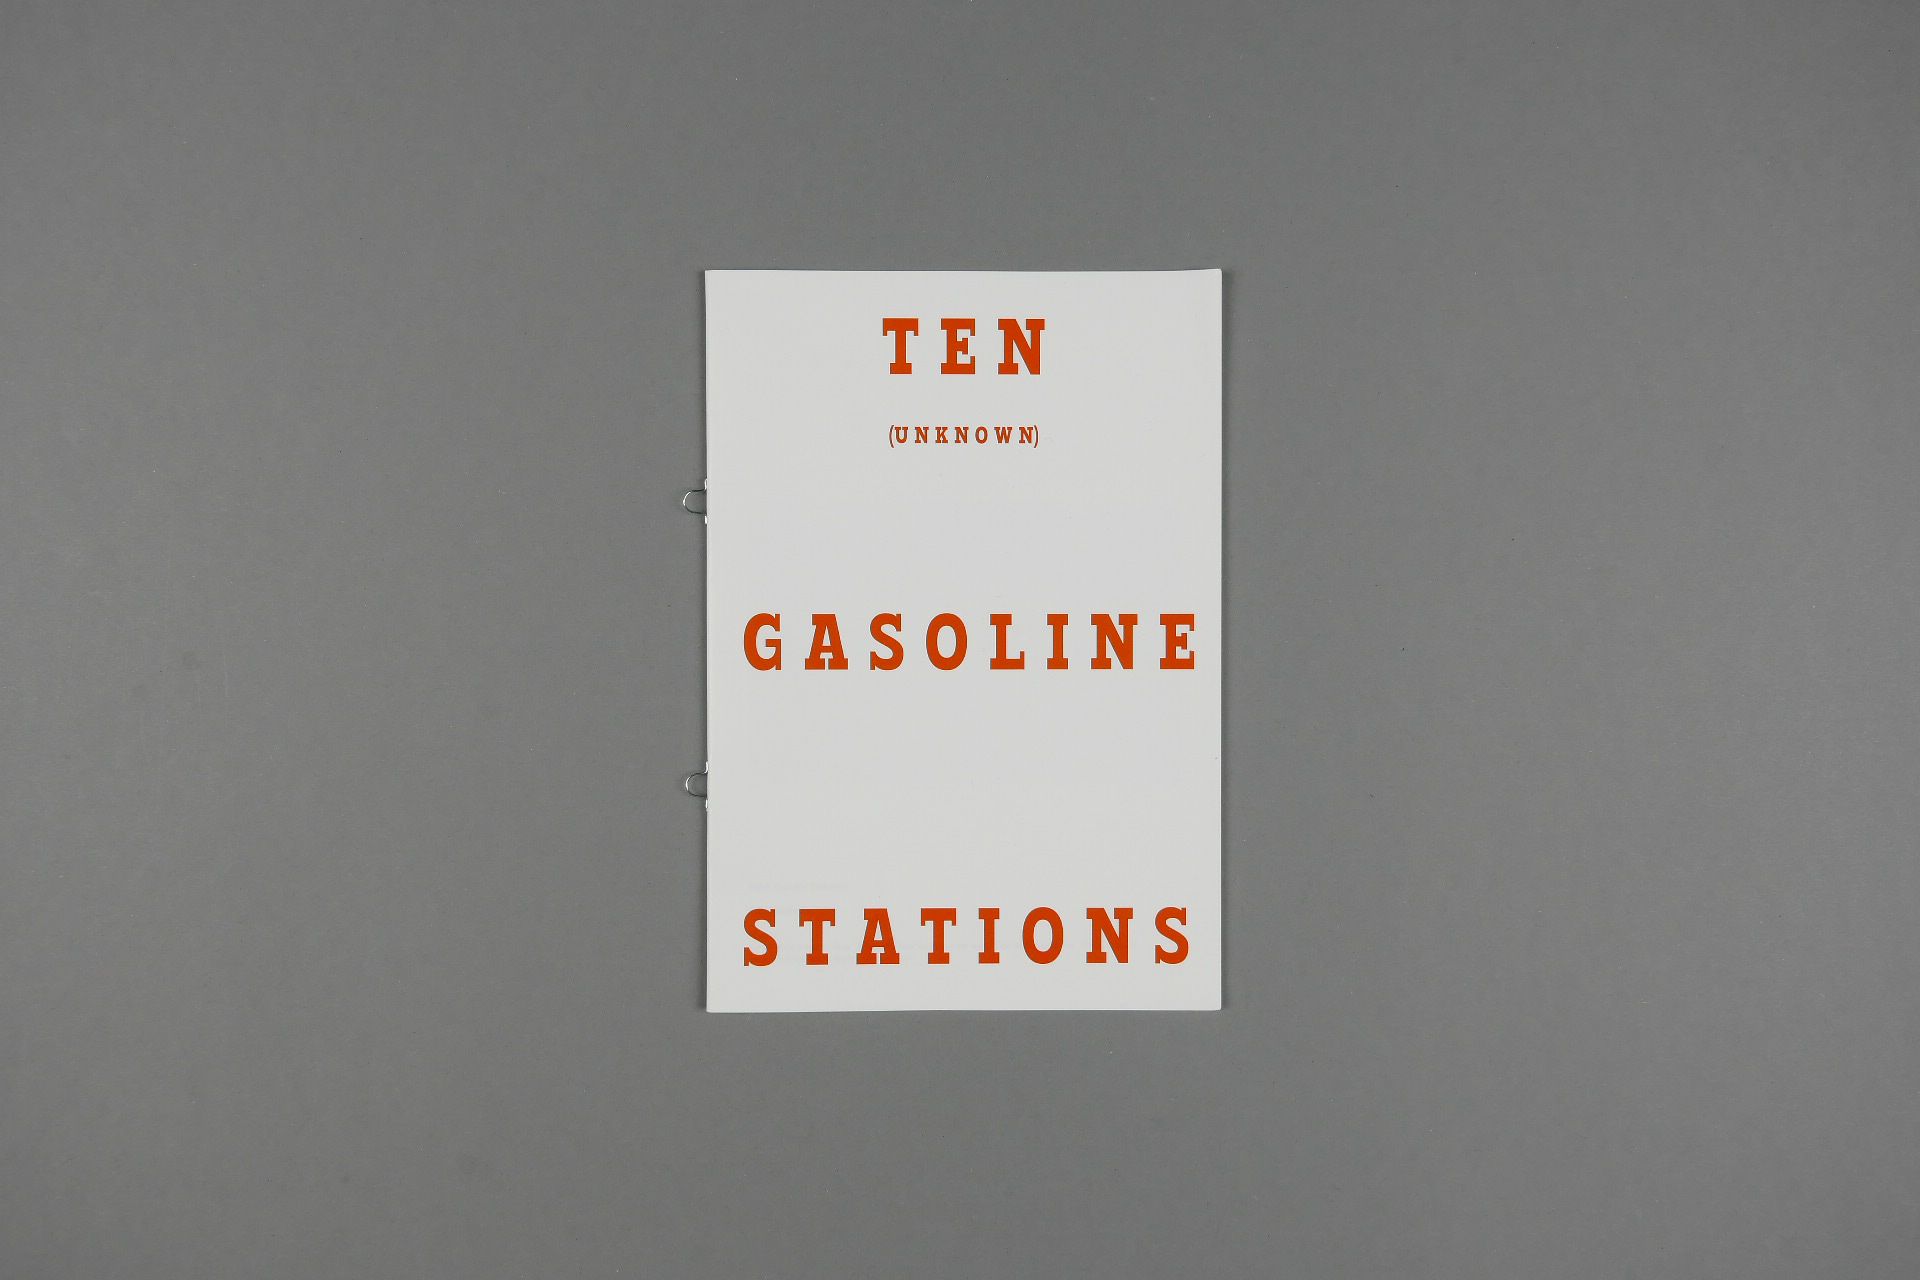 10 (unknown) gasoline stations